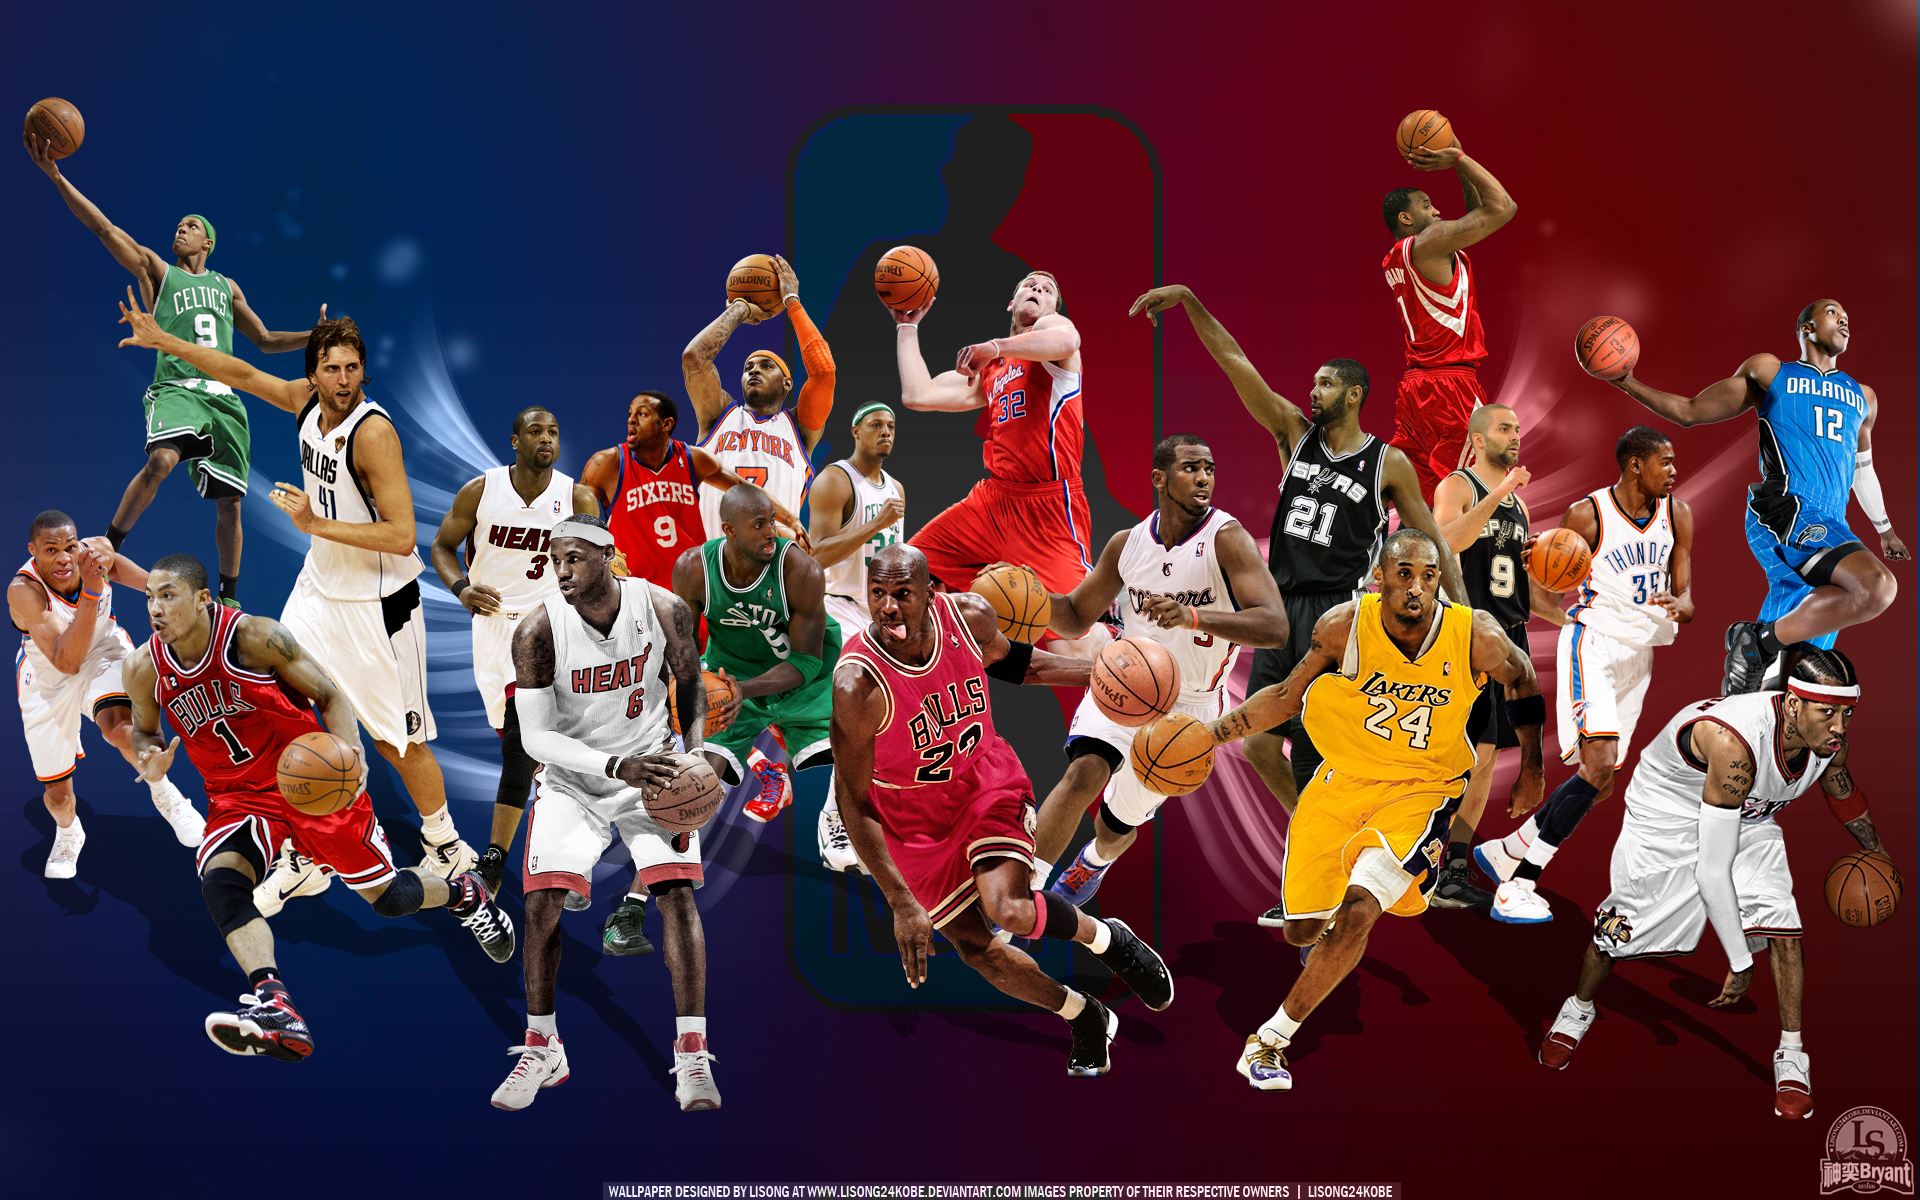 basketball wallpapers basketball wallpapers 2015 basketball wallpapers